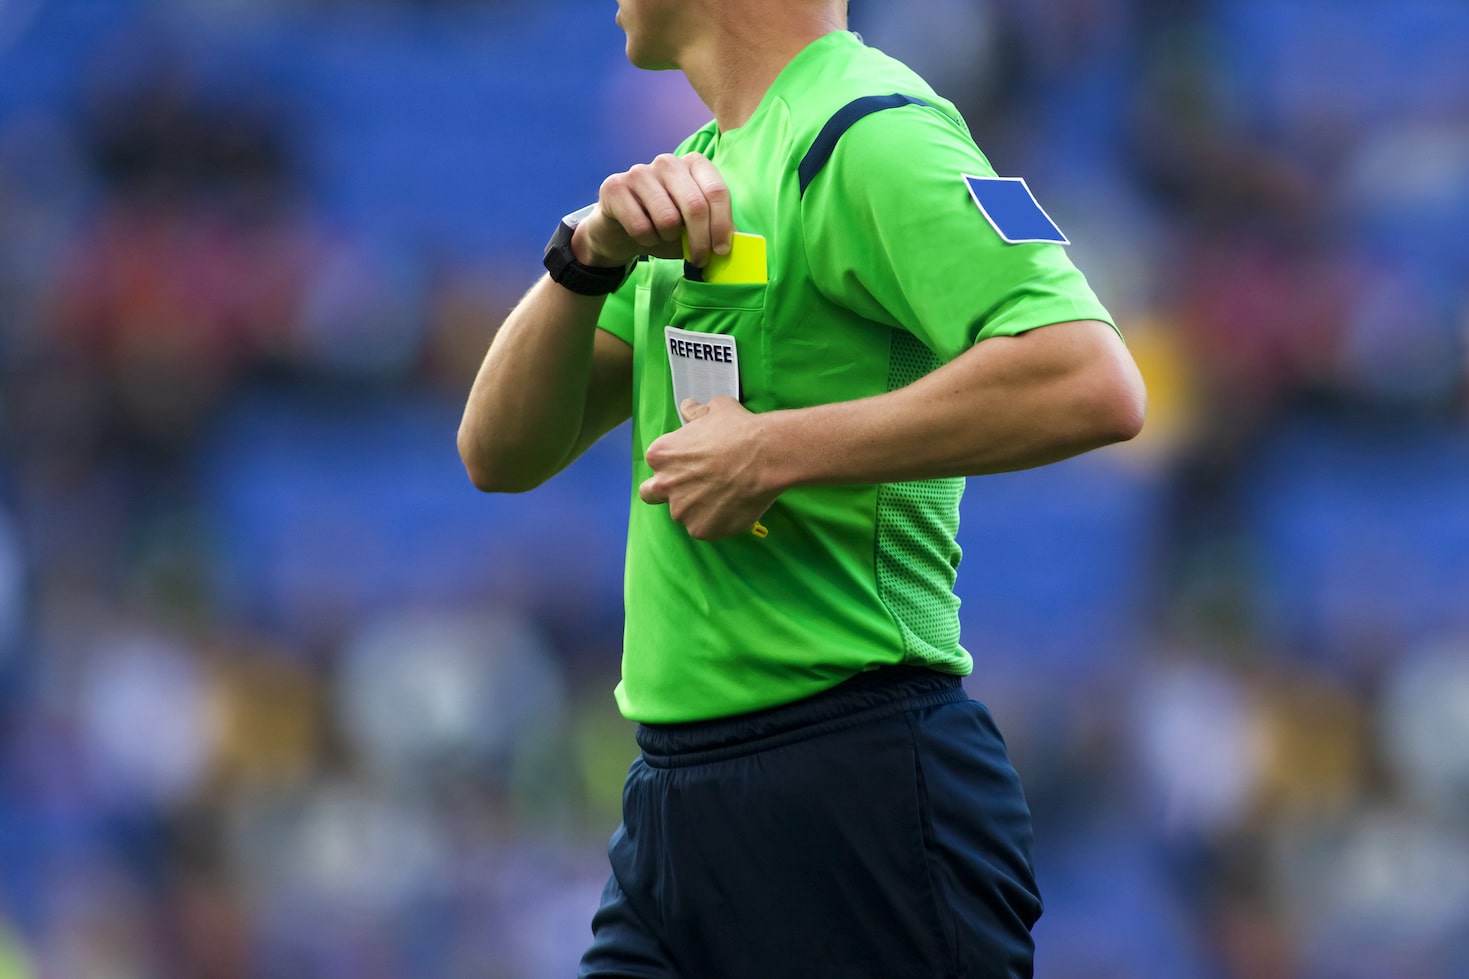 Soccer Referee